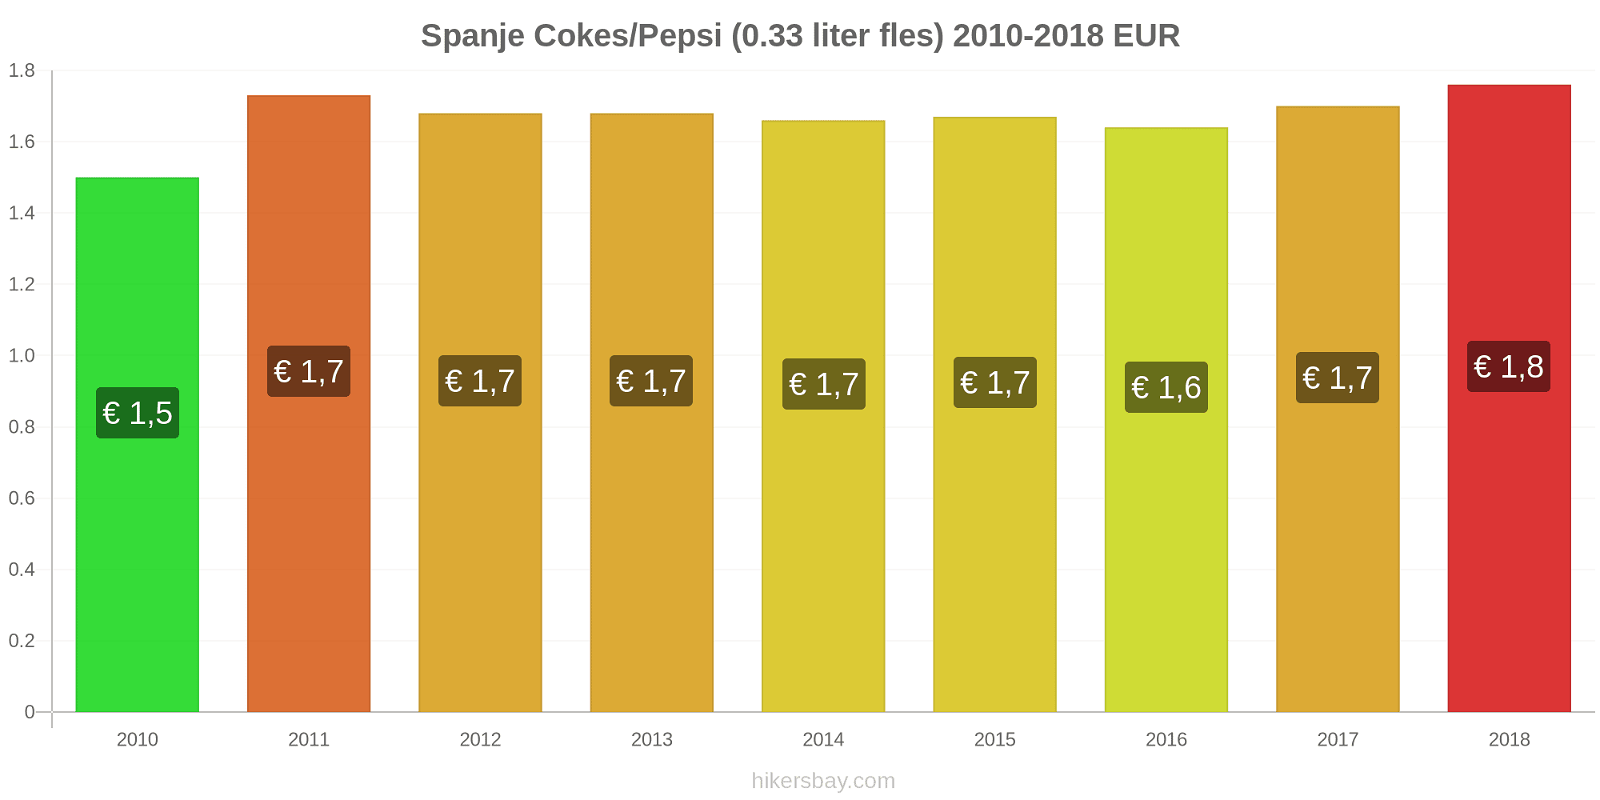 Spanje prijswijzigingen Cokes/Pepsi (0,33 literfles) hikersbay.com